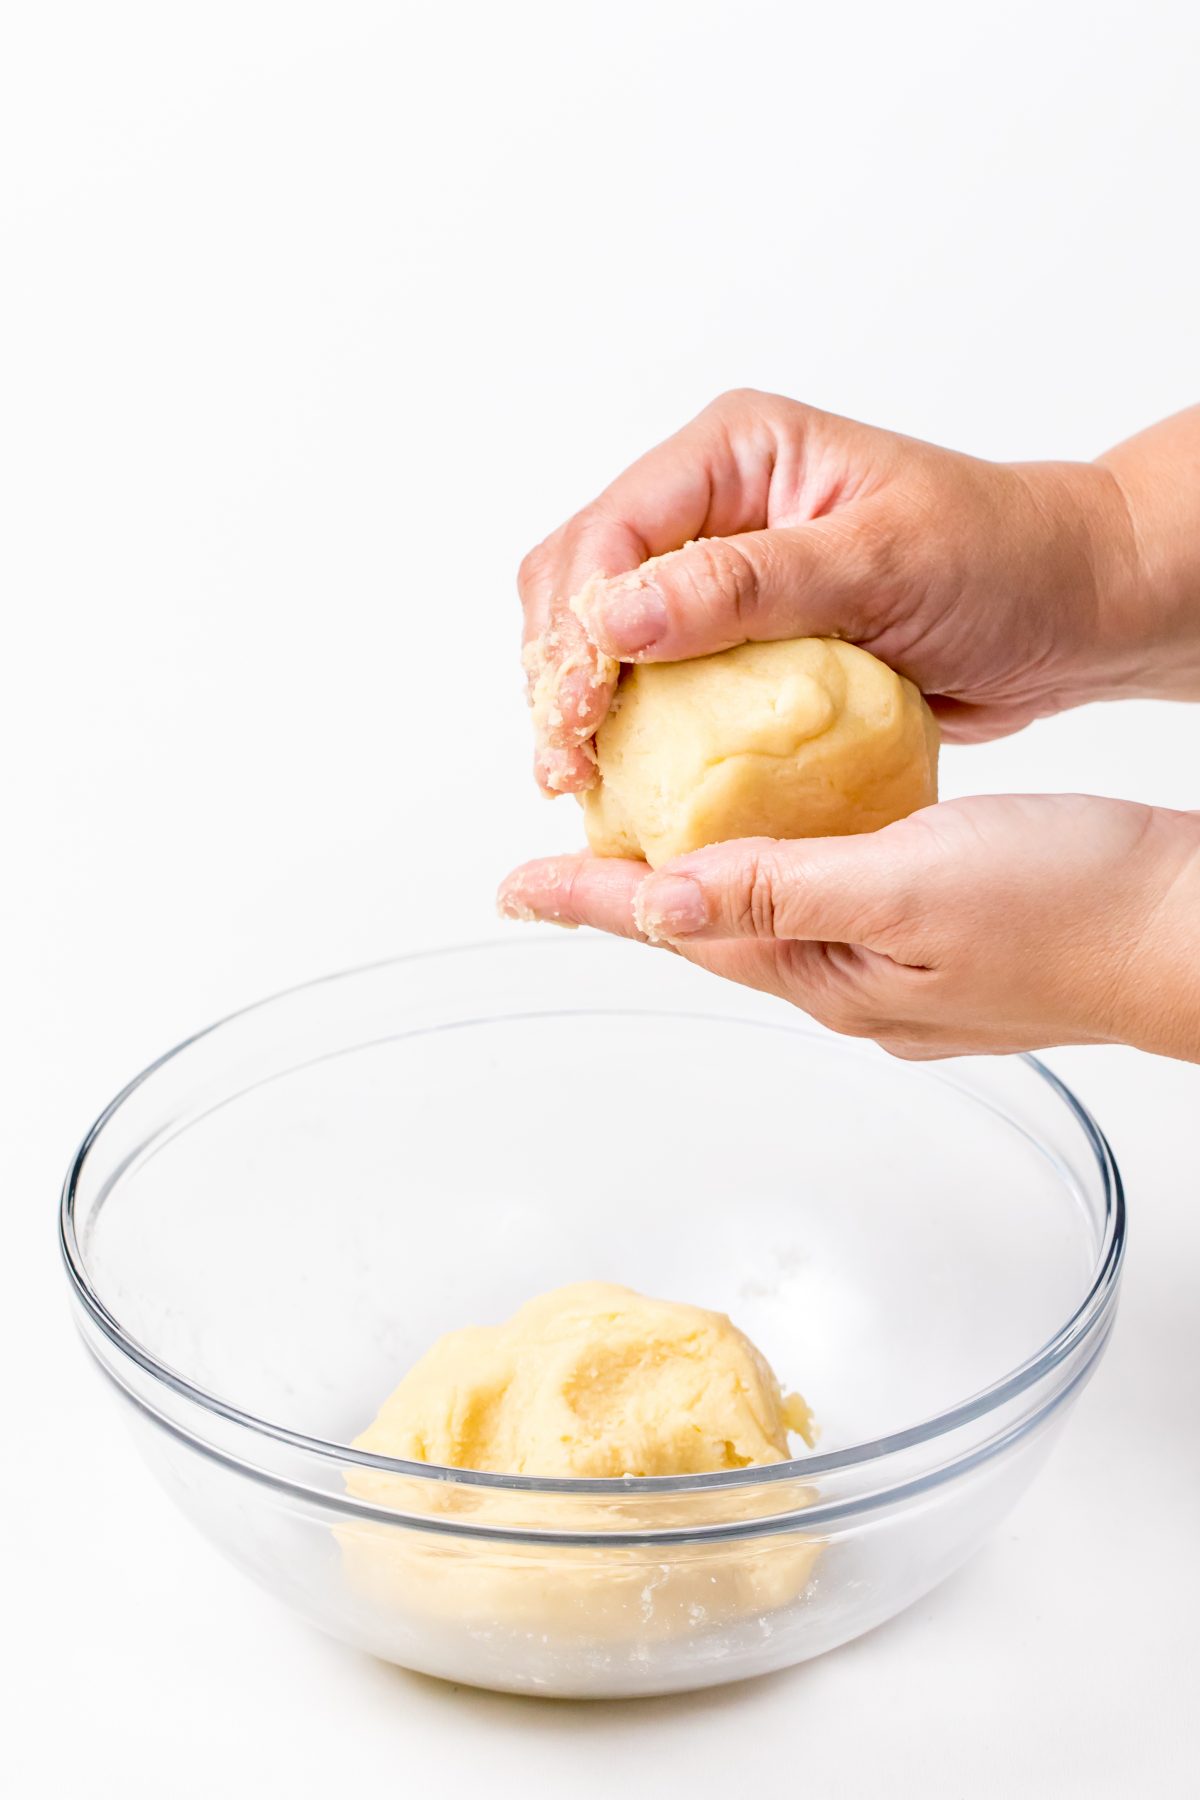 Divide dough in half with hands